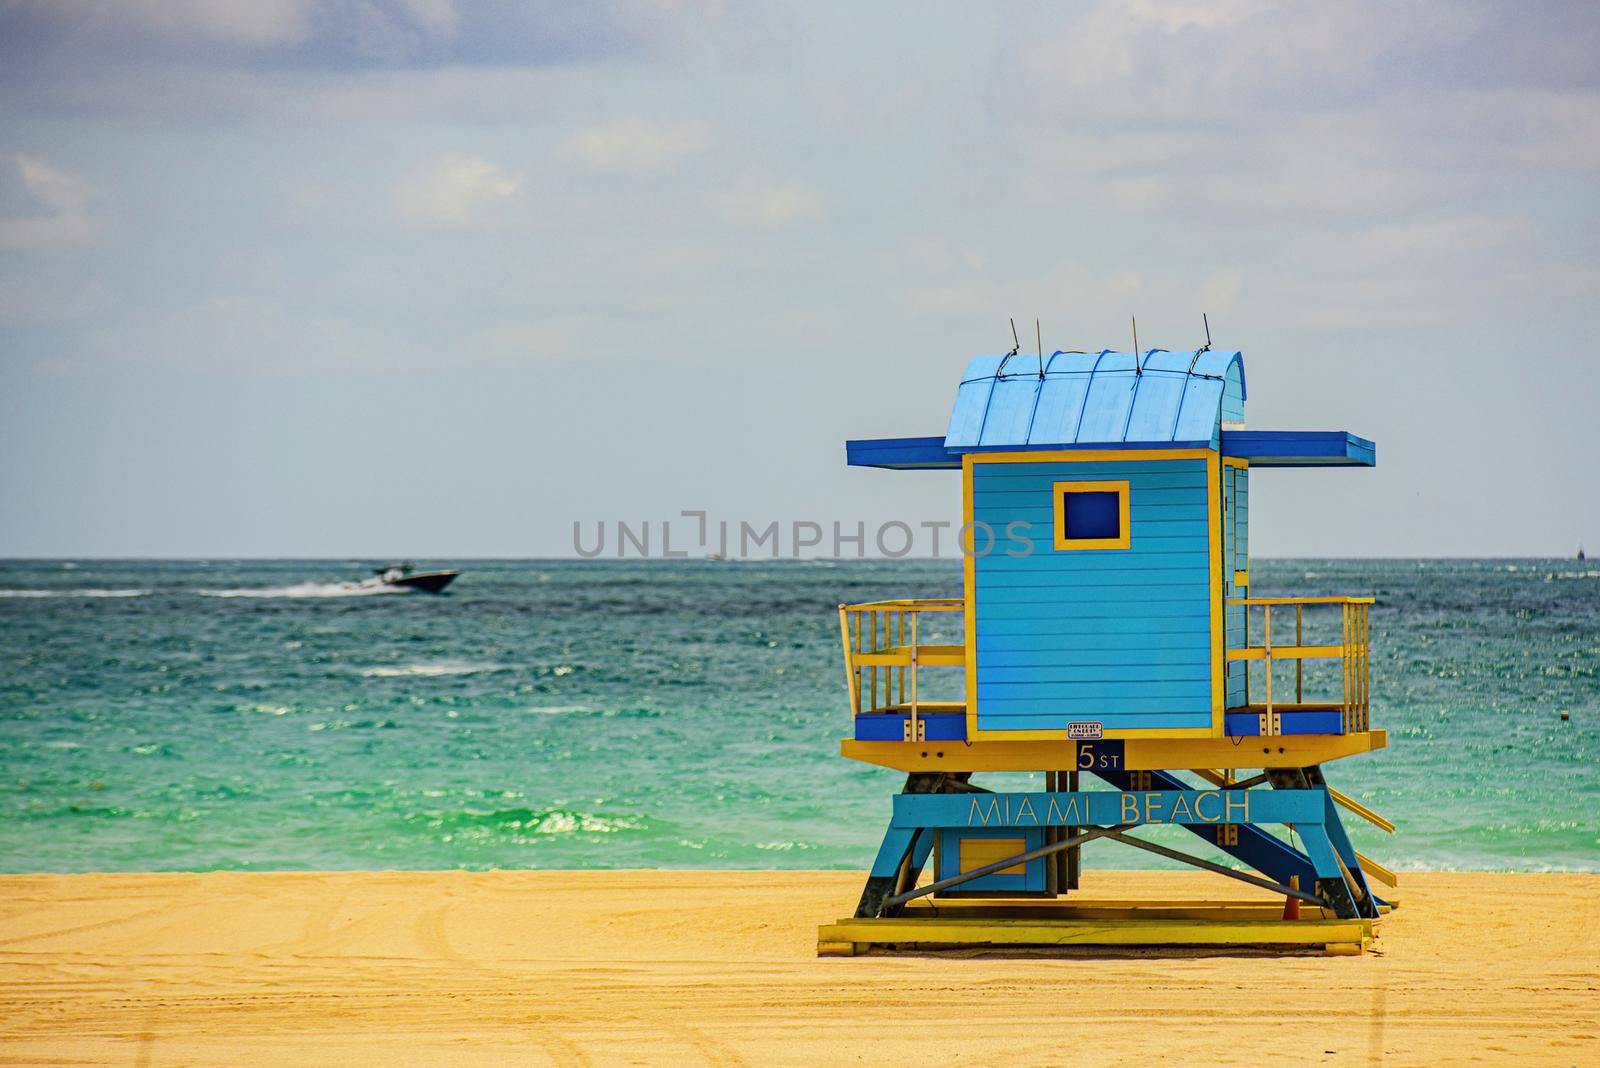 Miami South Beach lifeguard tower and coastline with cloud and blue sky. Miami Beach, Florida. by Tverdokhlib